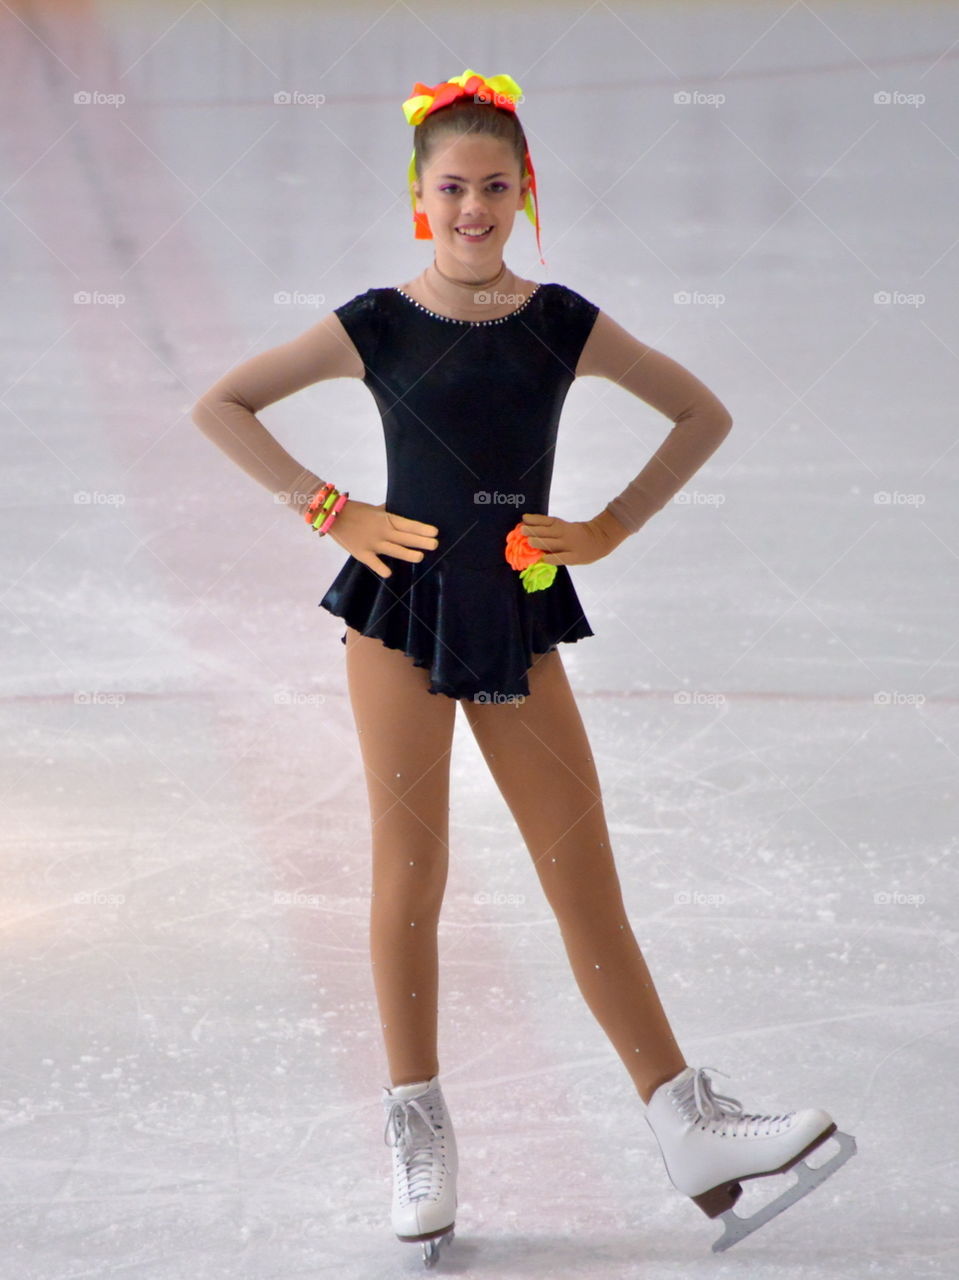 dancer on ice